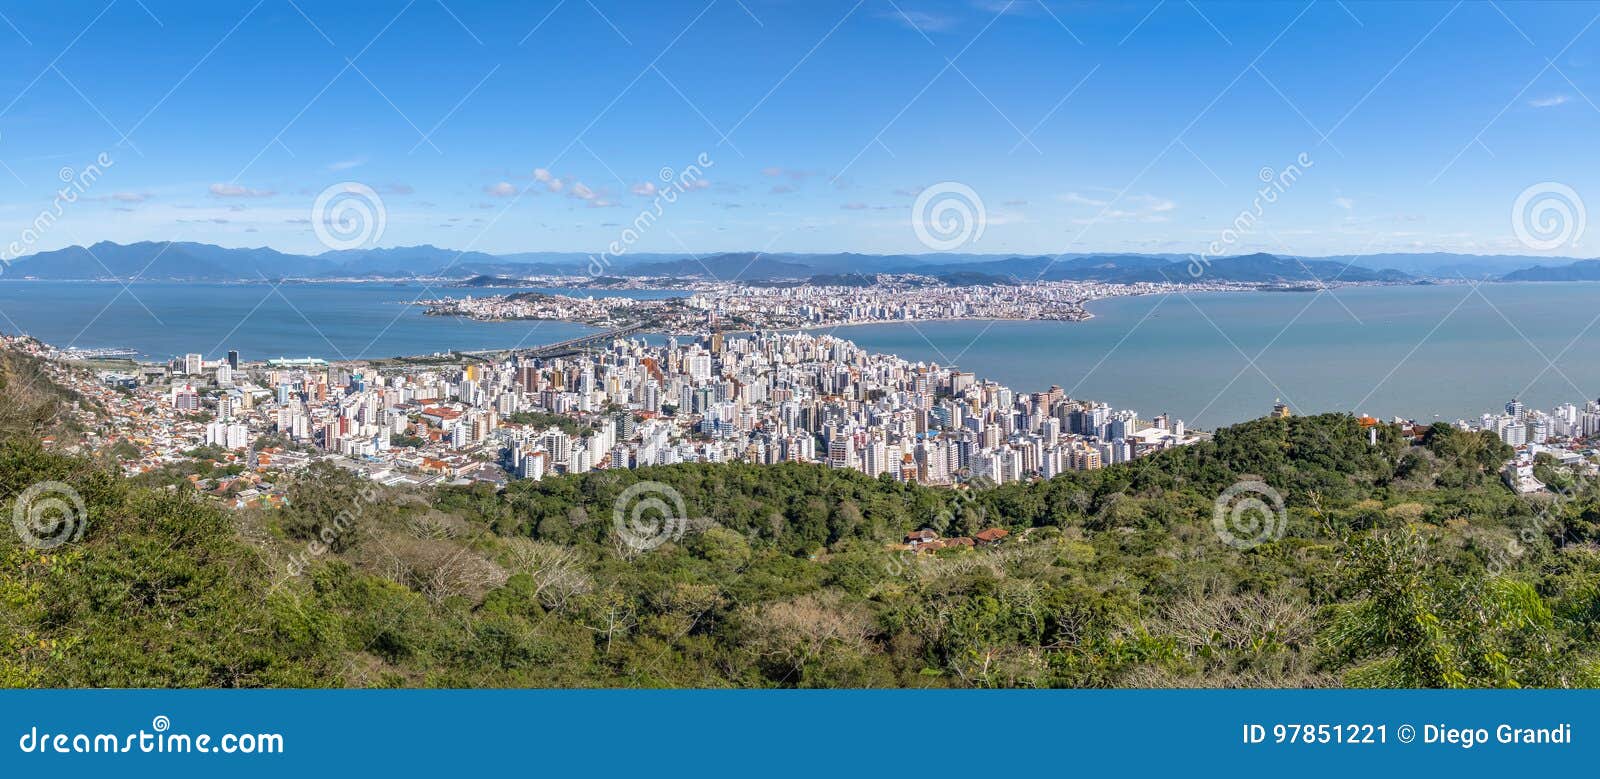 panoramic aerial view of dowtown florianopolis city in florianopolis, santa catarina, brazil